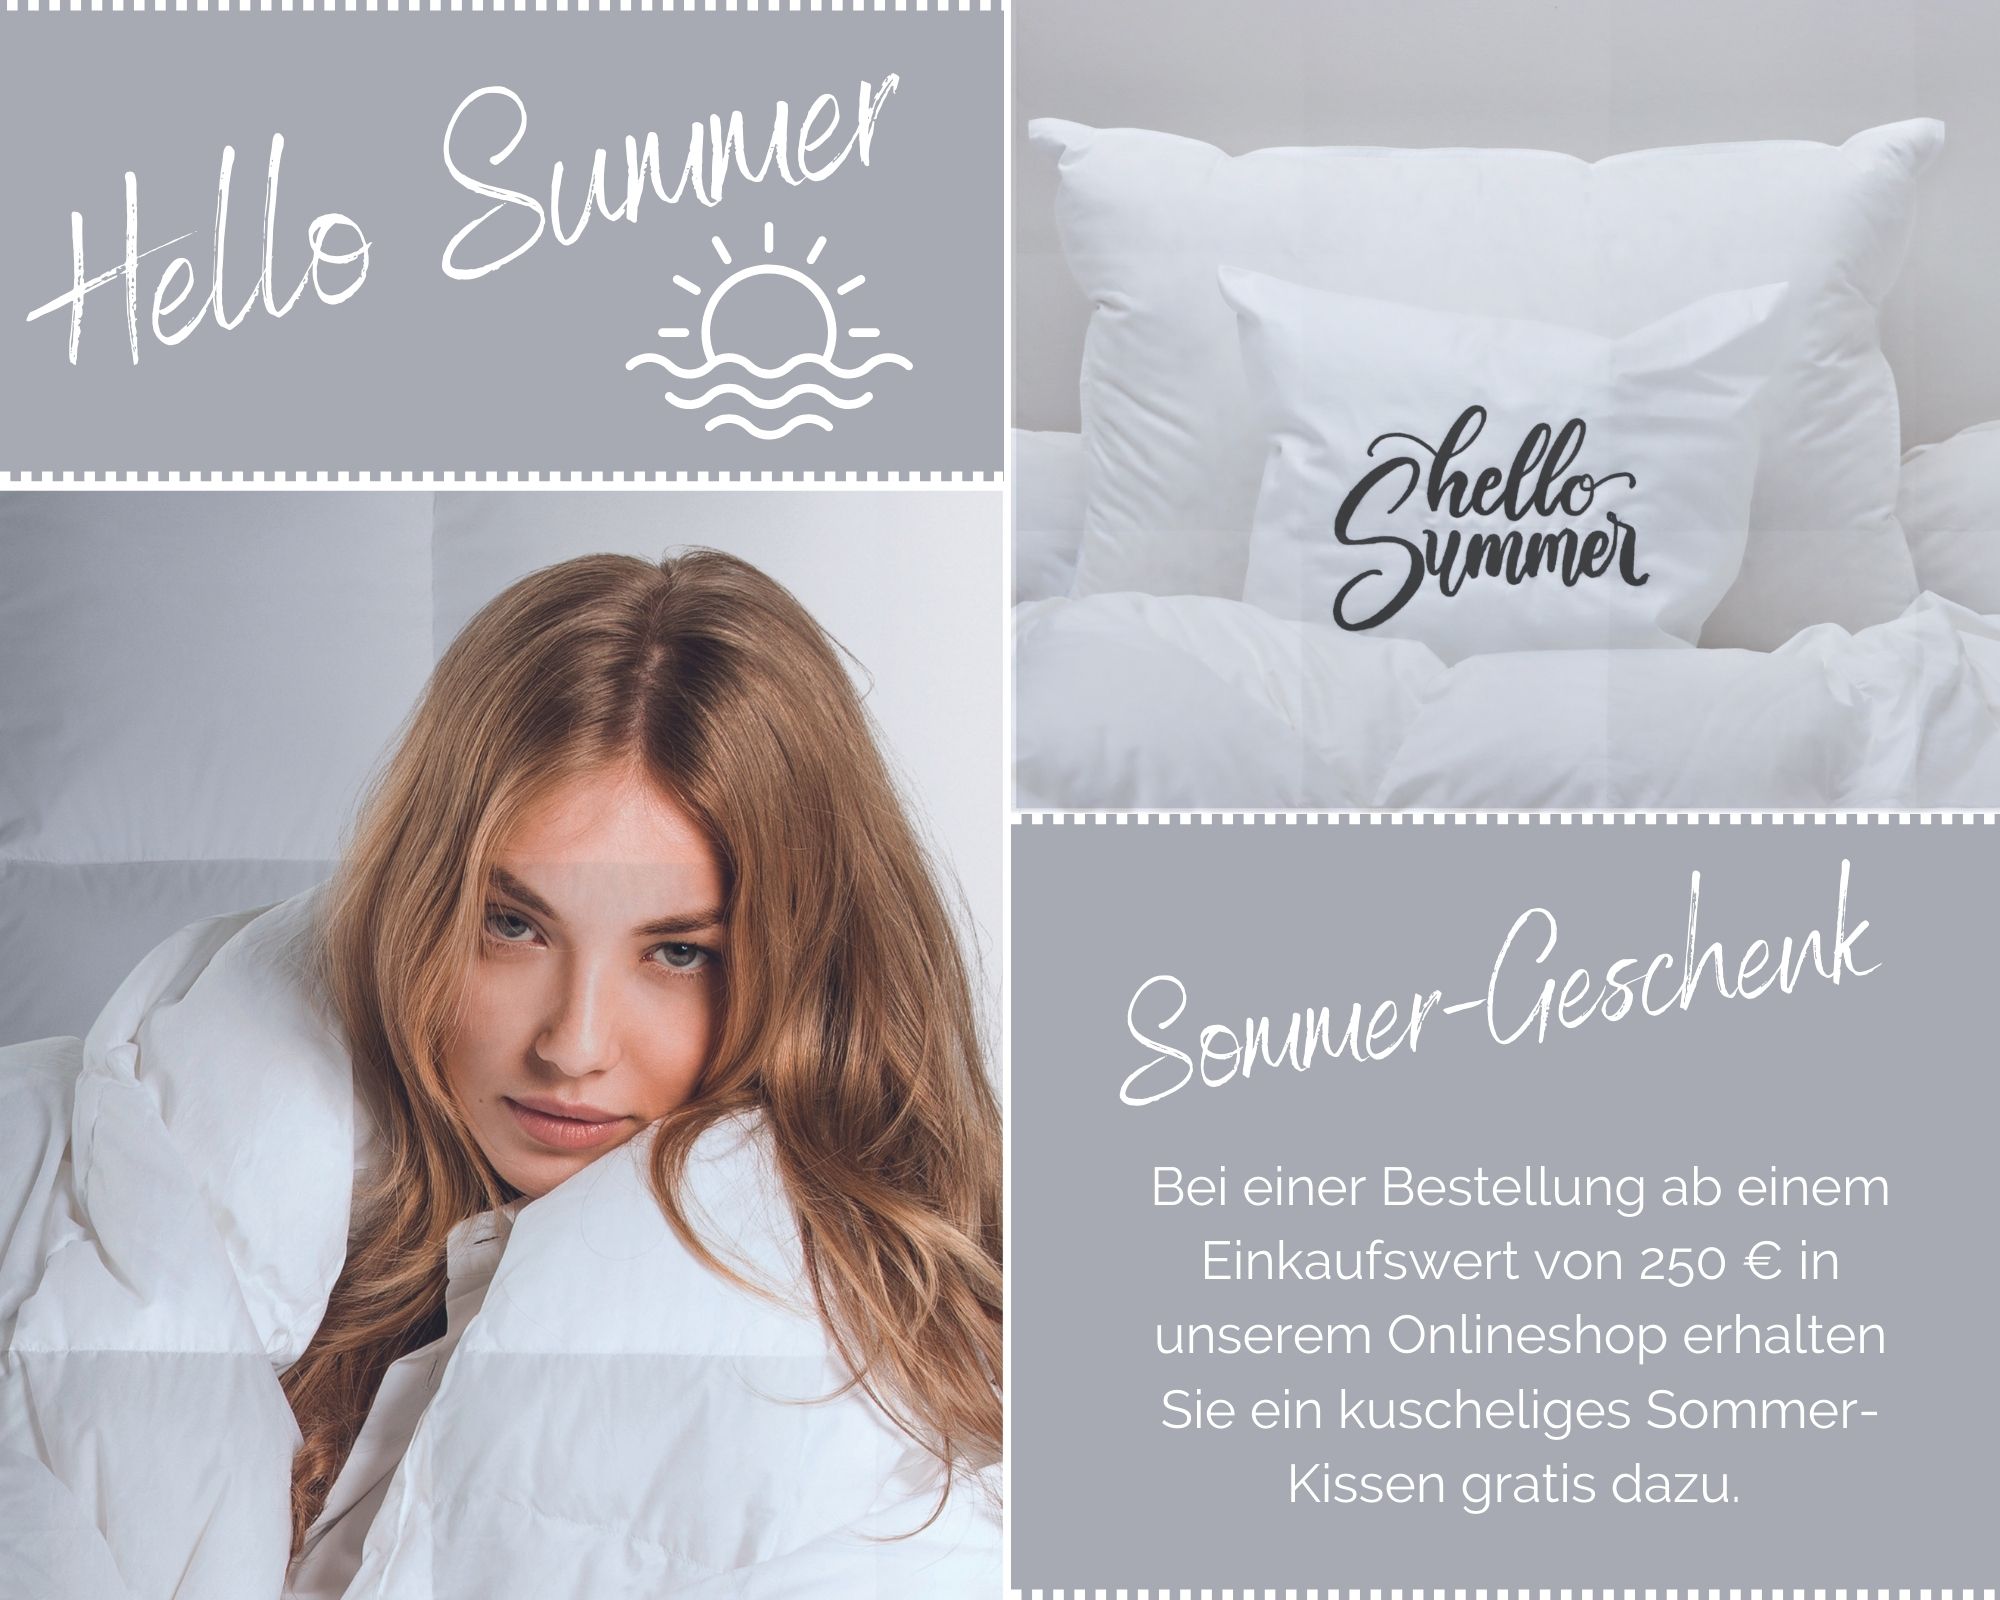 Hello Summer - Aktion bei Sanders-Kauffmann